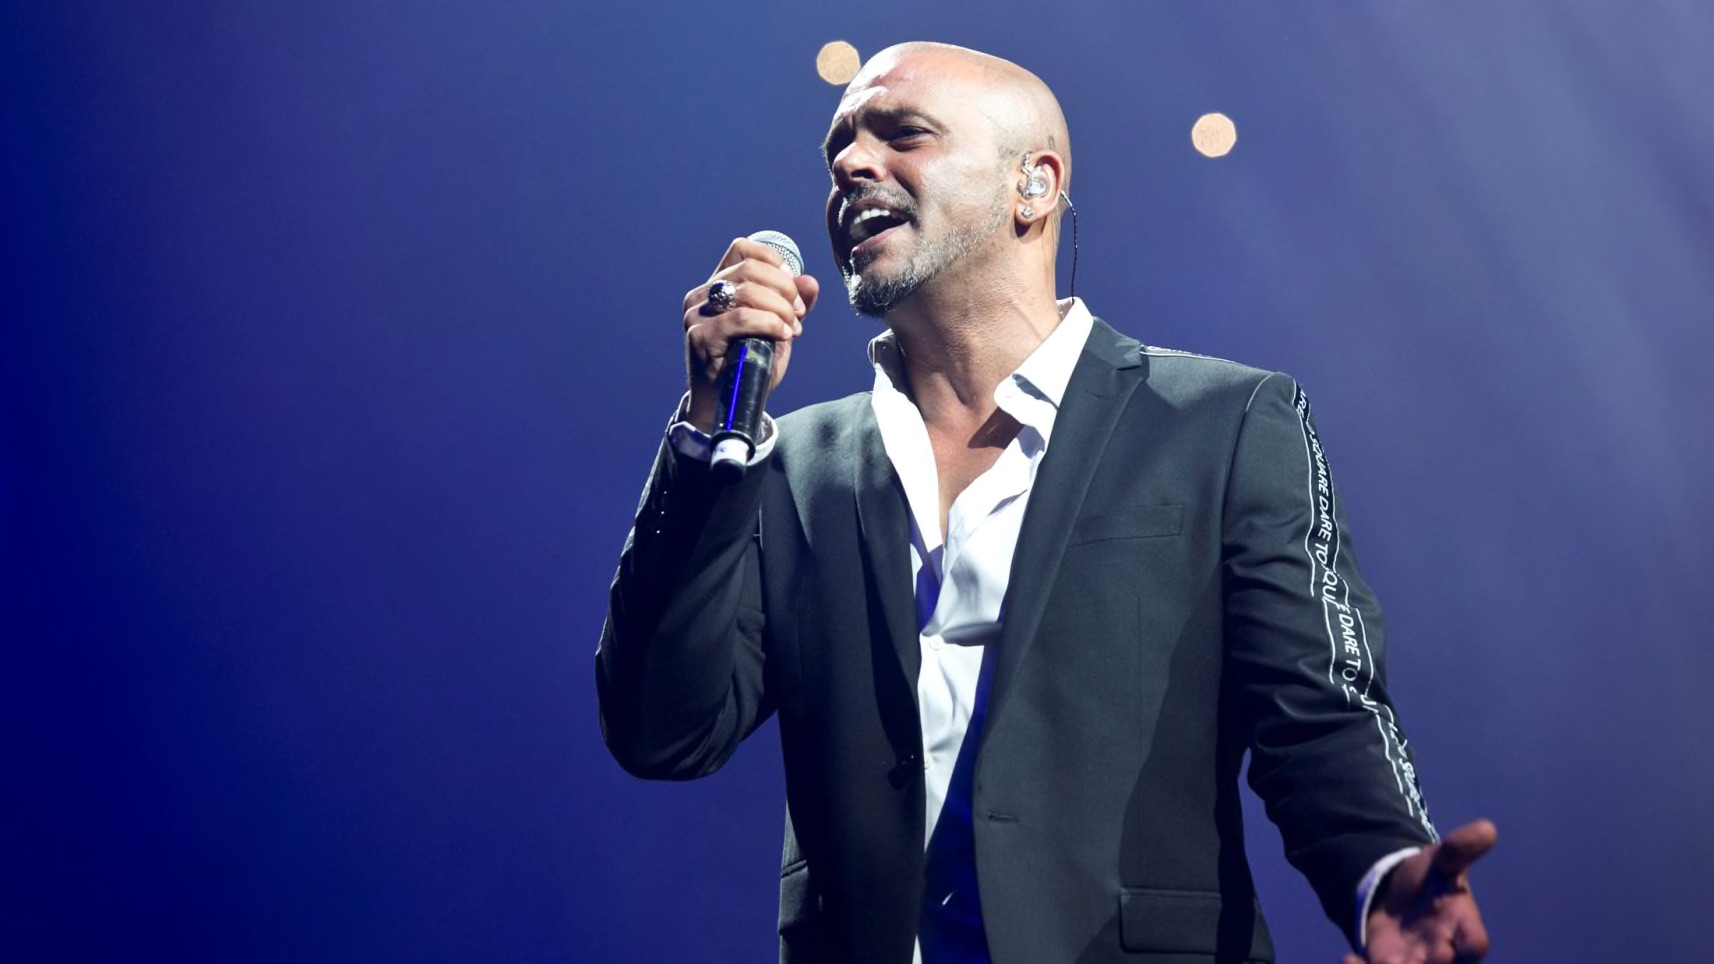 Singer Eyal Golan Is Born